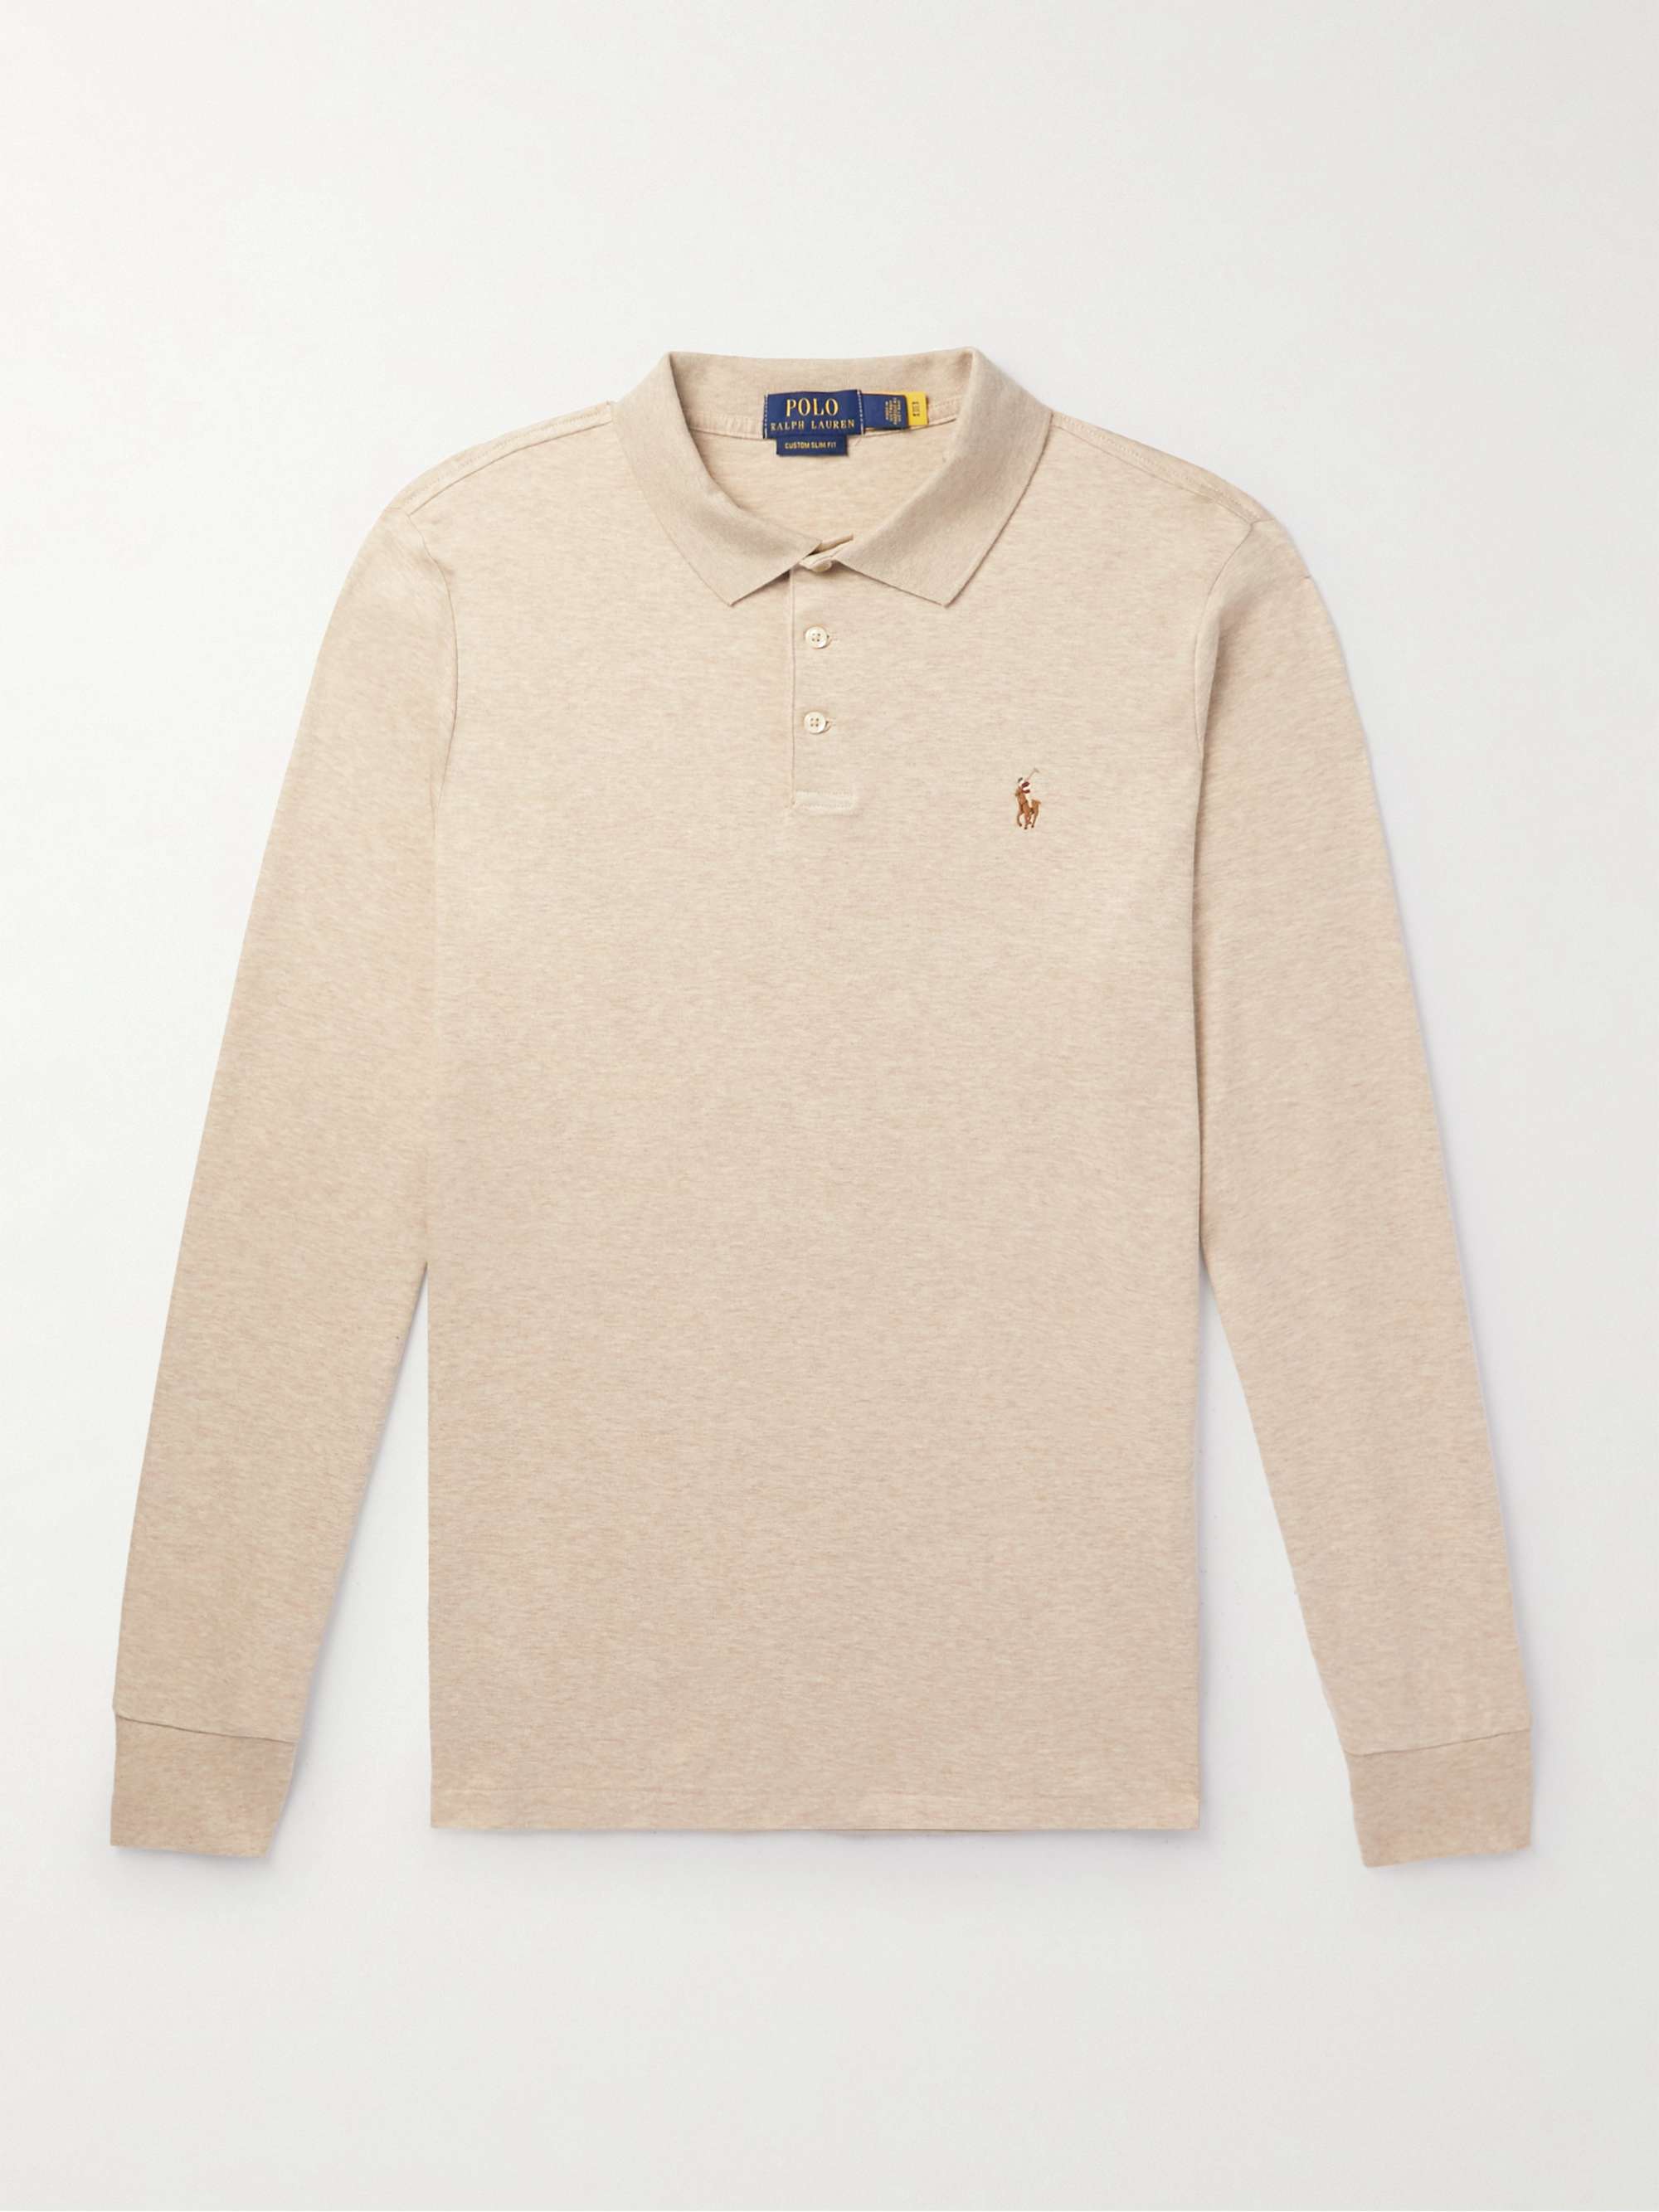 Polo RALPH LAUREN Logo-Embroidered Cotton-Jersey Polo Shirt,Beige